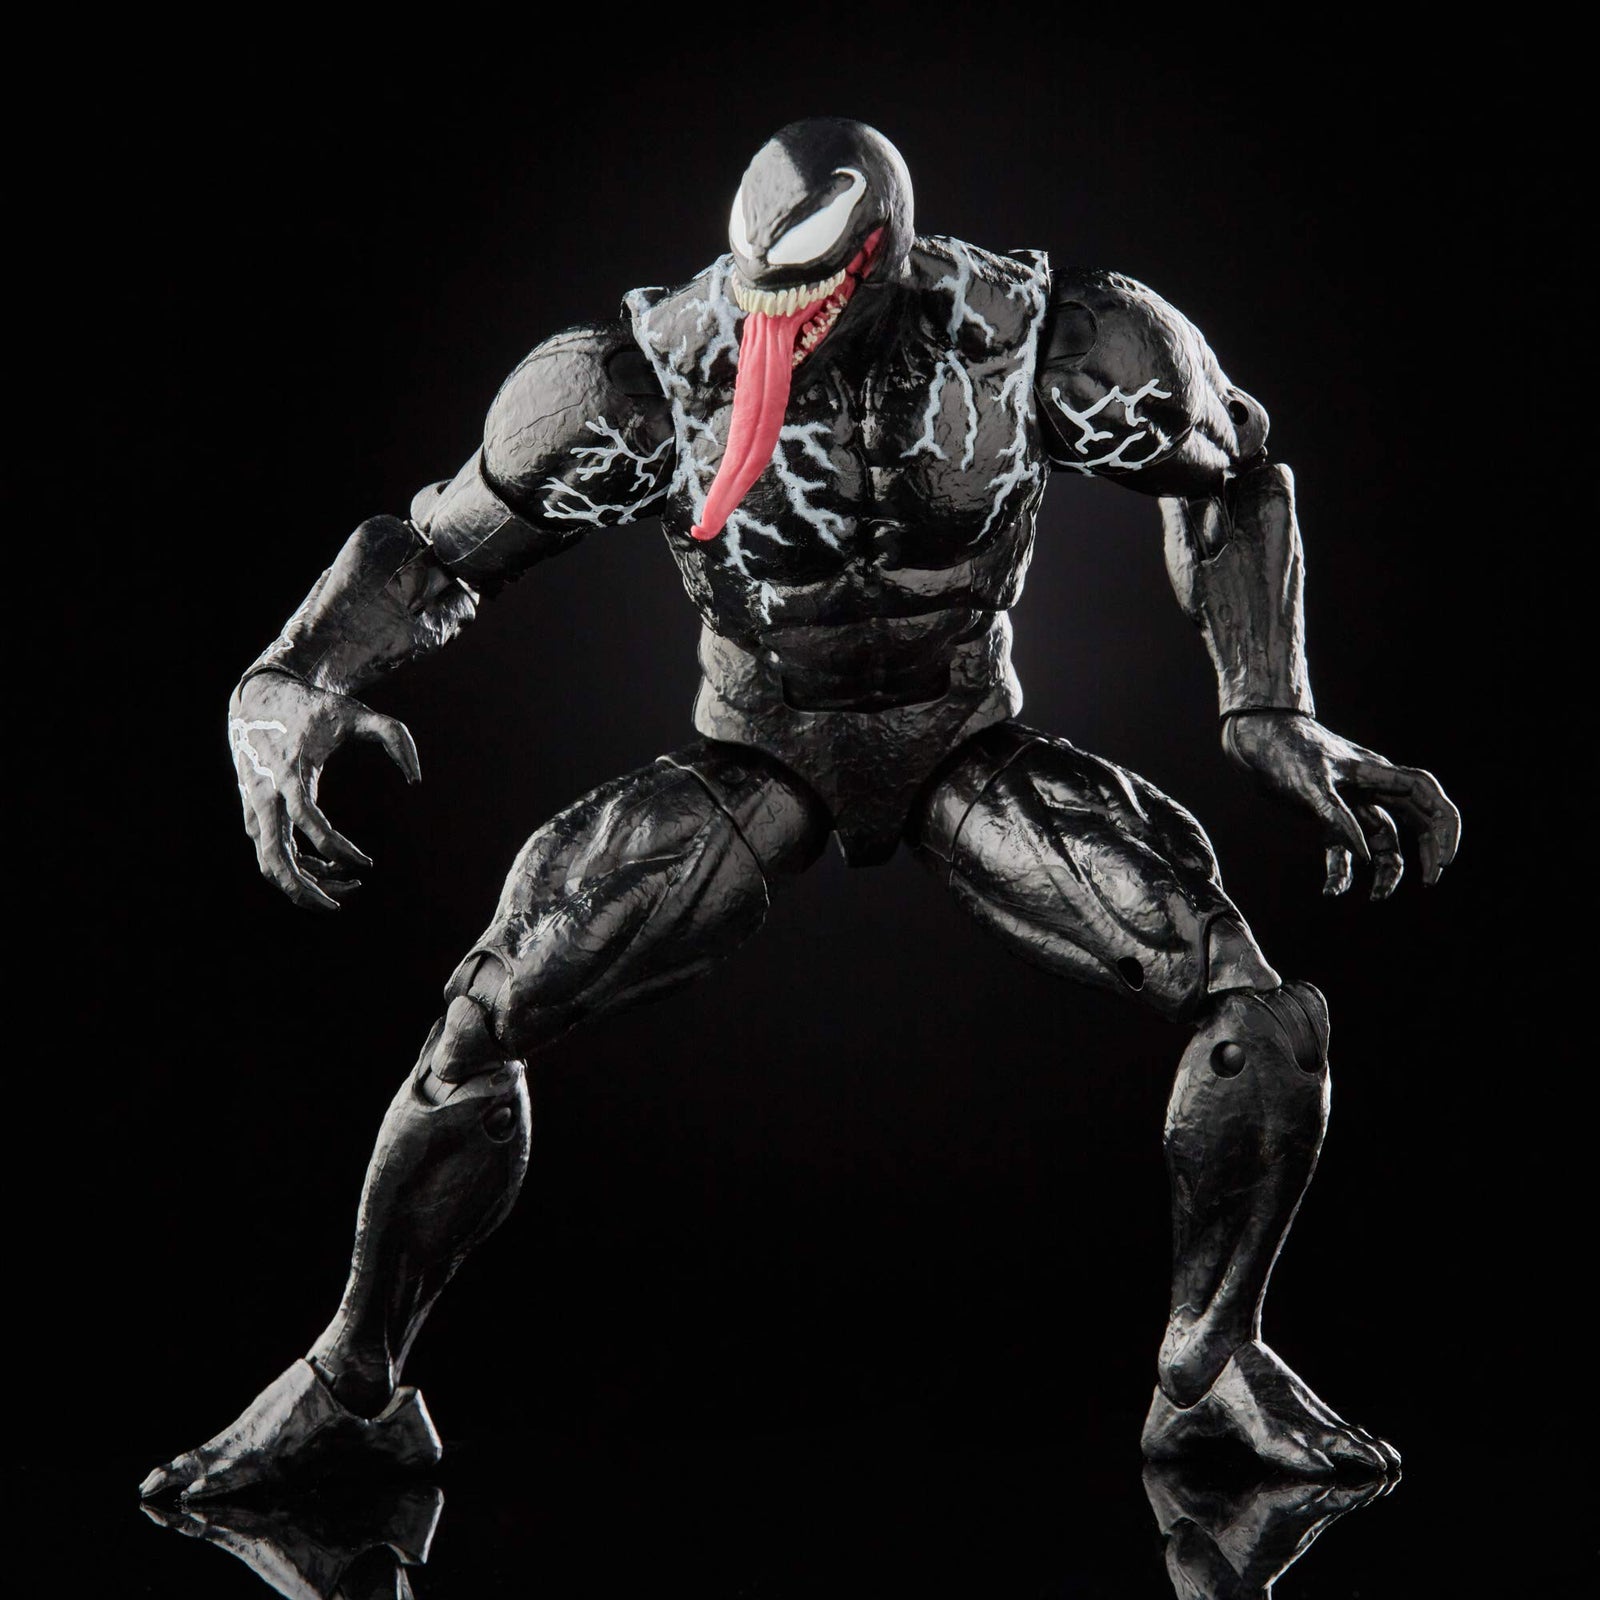 Hasbro Marvel Legends Series Venom 6-inch Collectible Action Figure Venom Toy, Premium Design and 3 Accessories